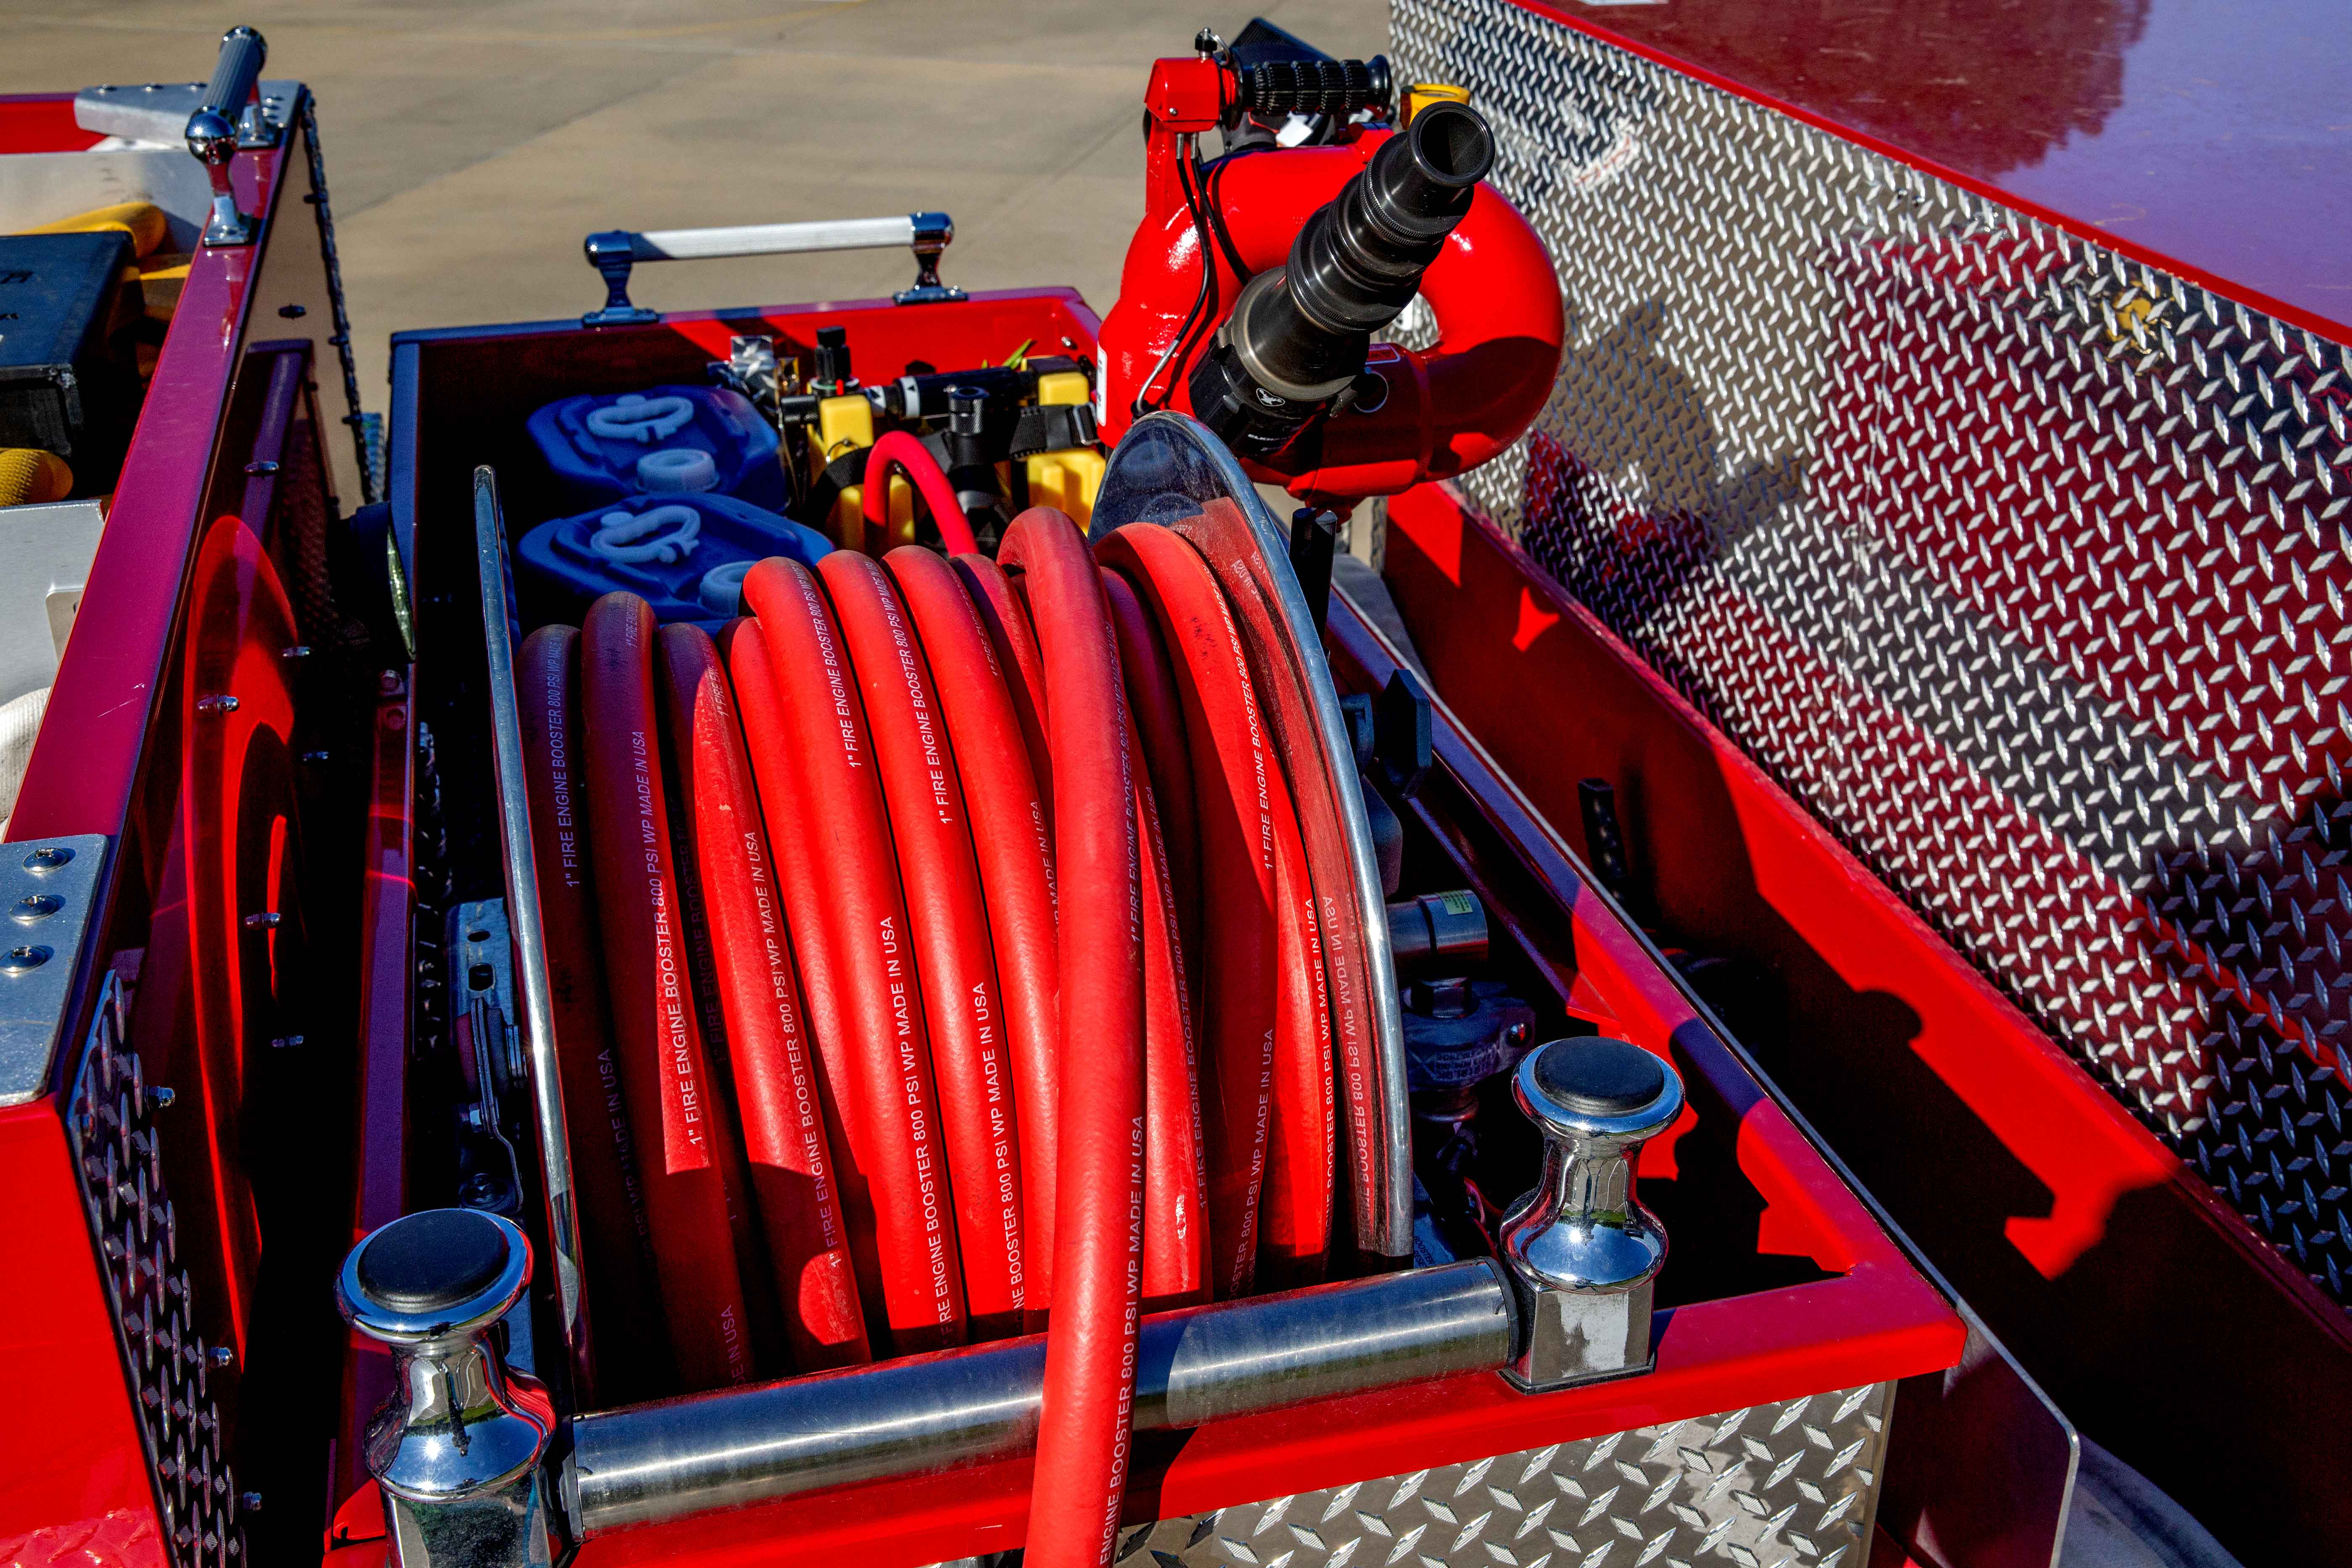 Lafayette County Fire Department Saber Pumper